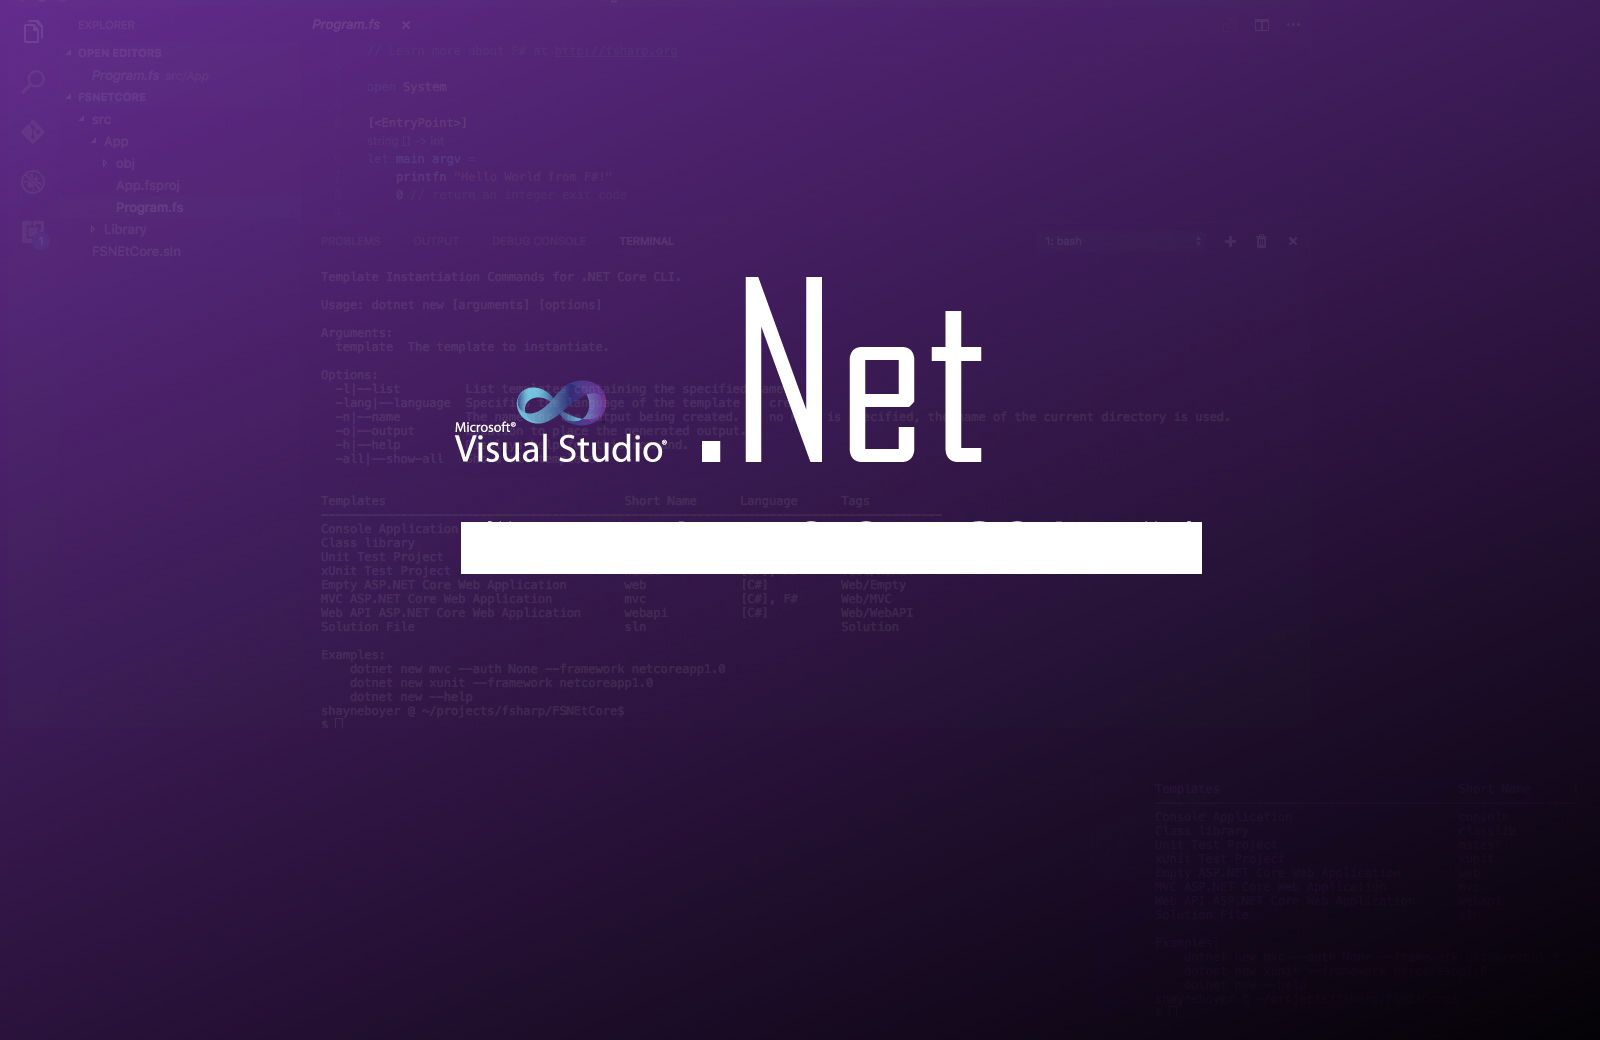 Why use .NET Framework for Web Development?